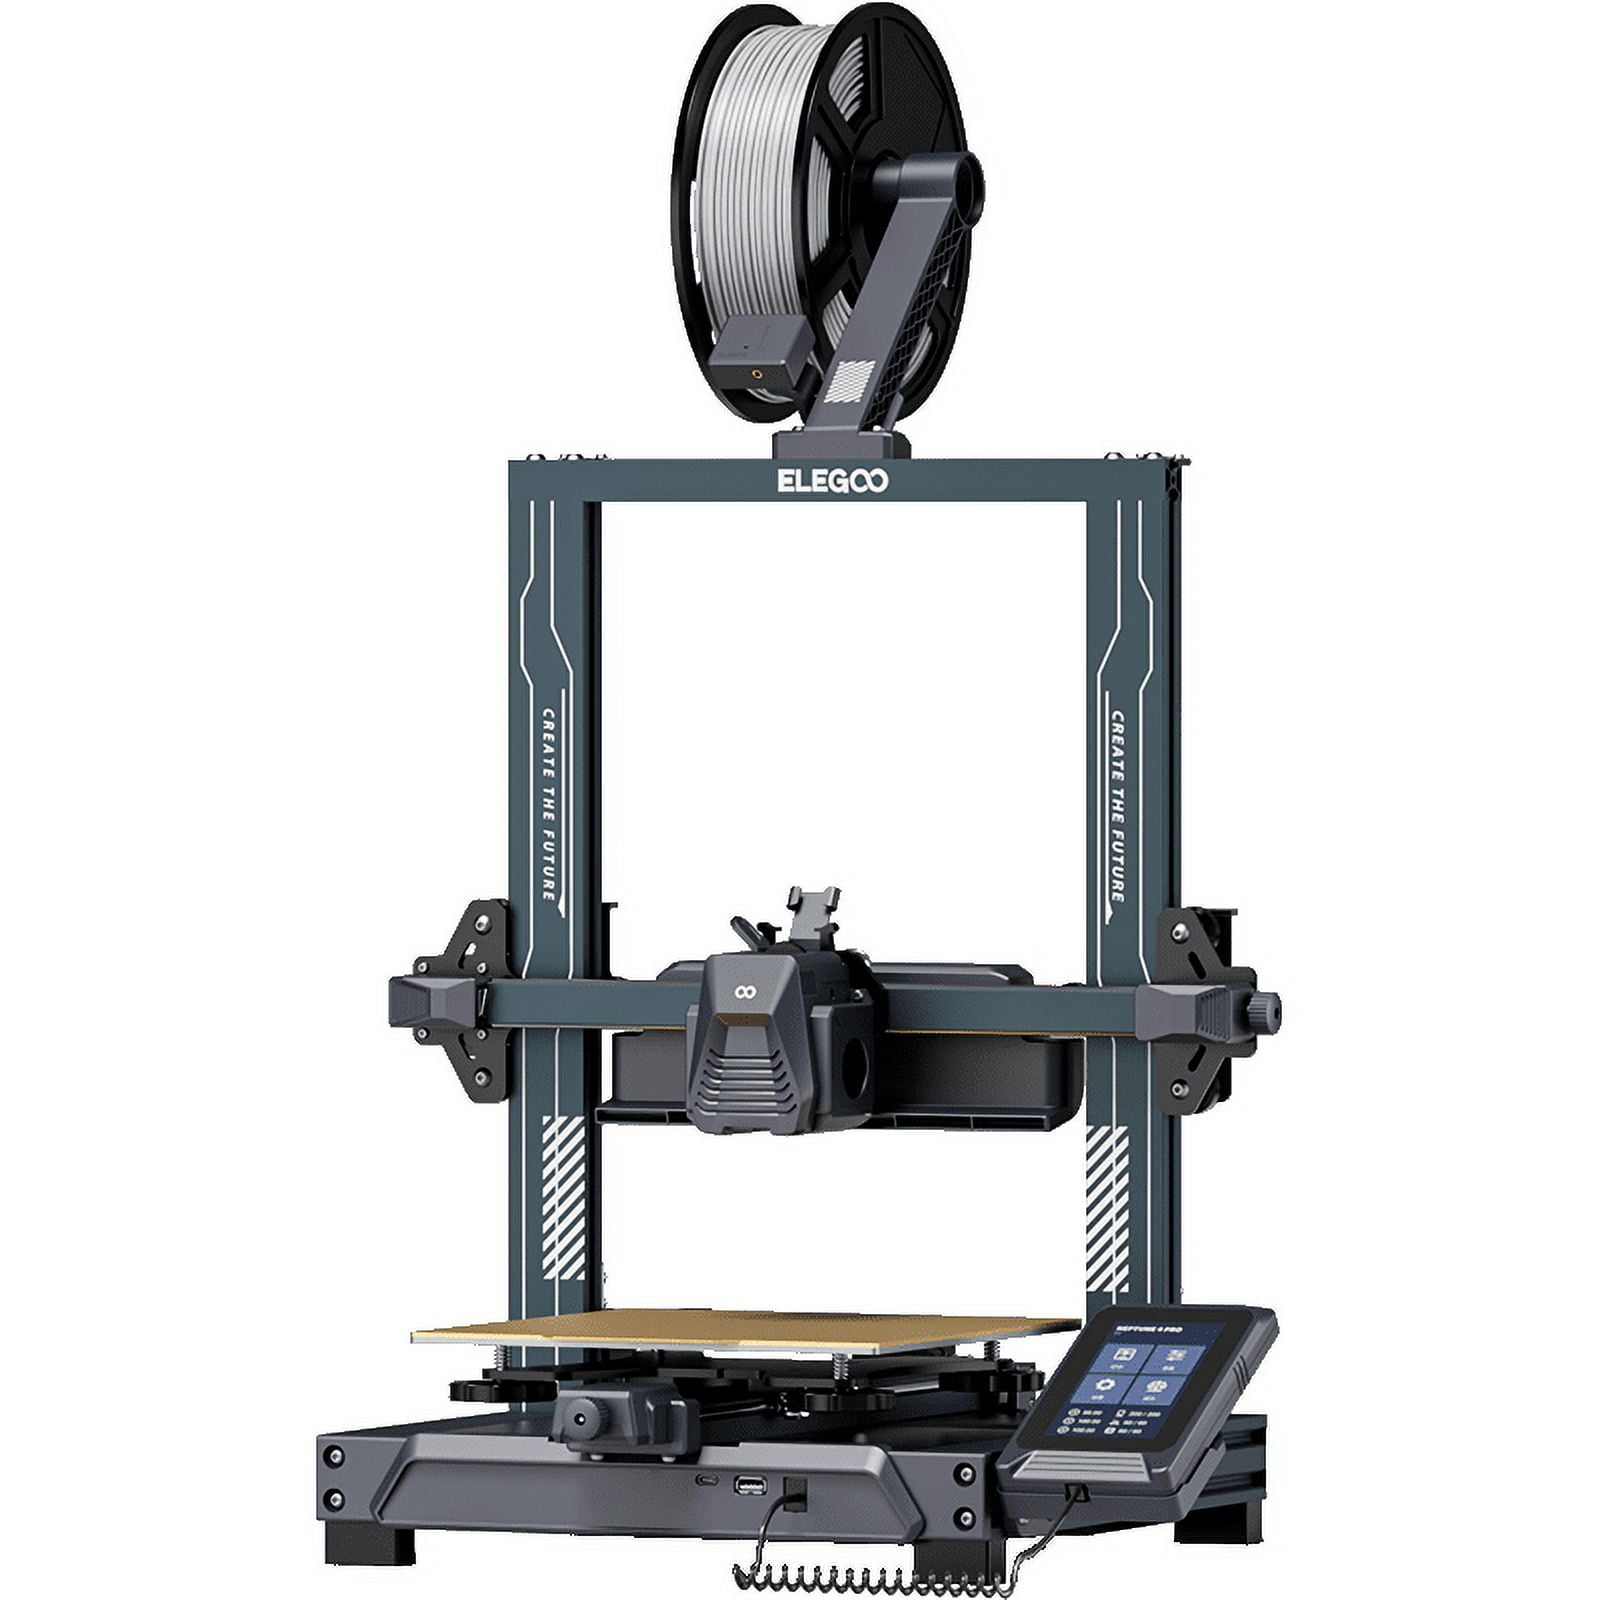 Elegoo Neptune 4 Pro - FDM 3D printer